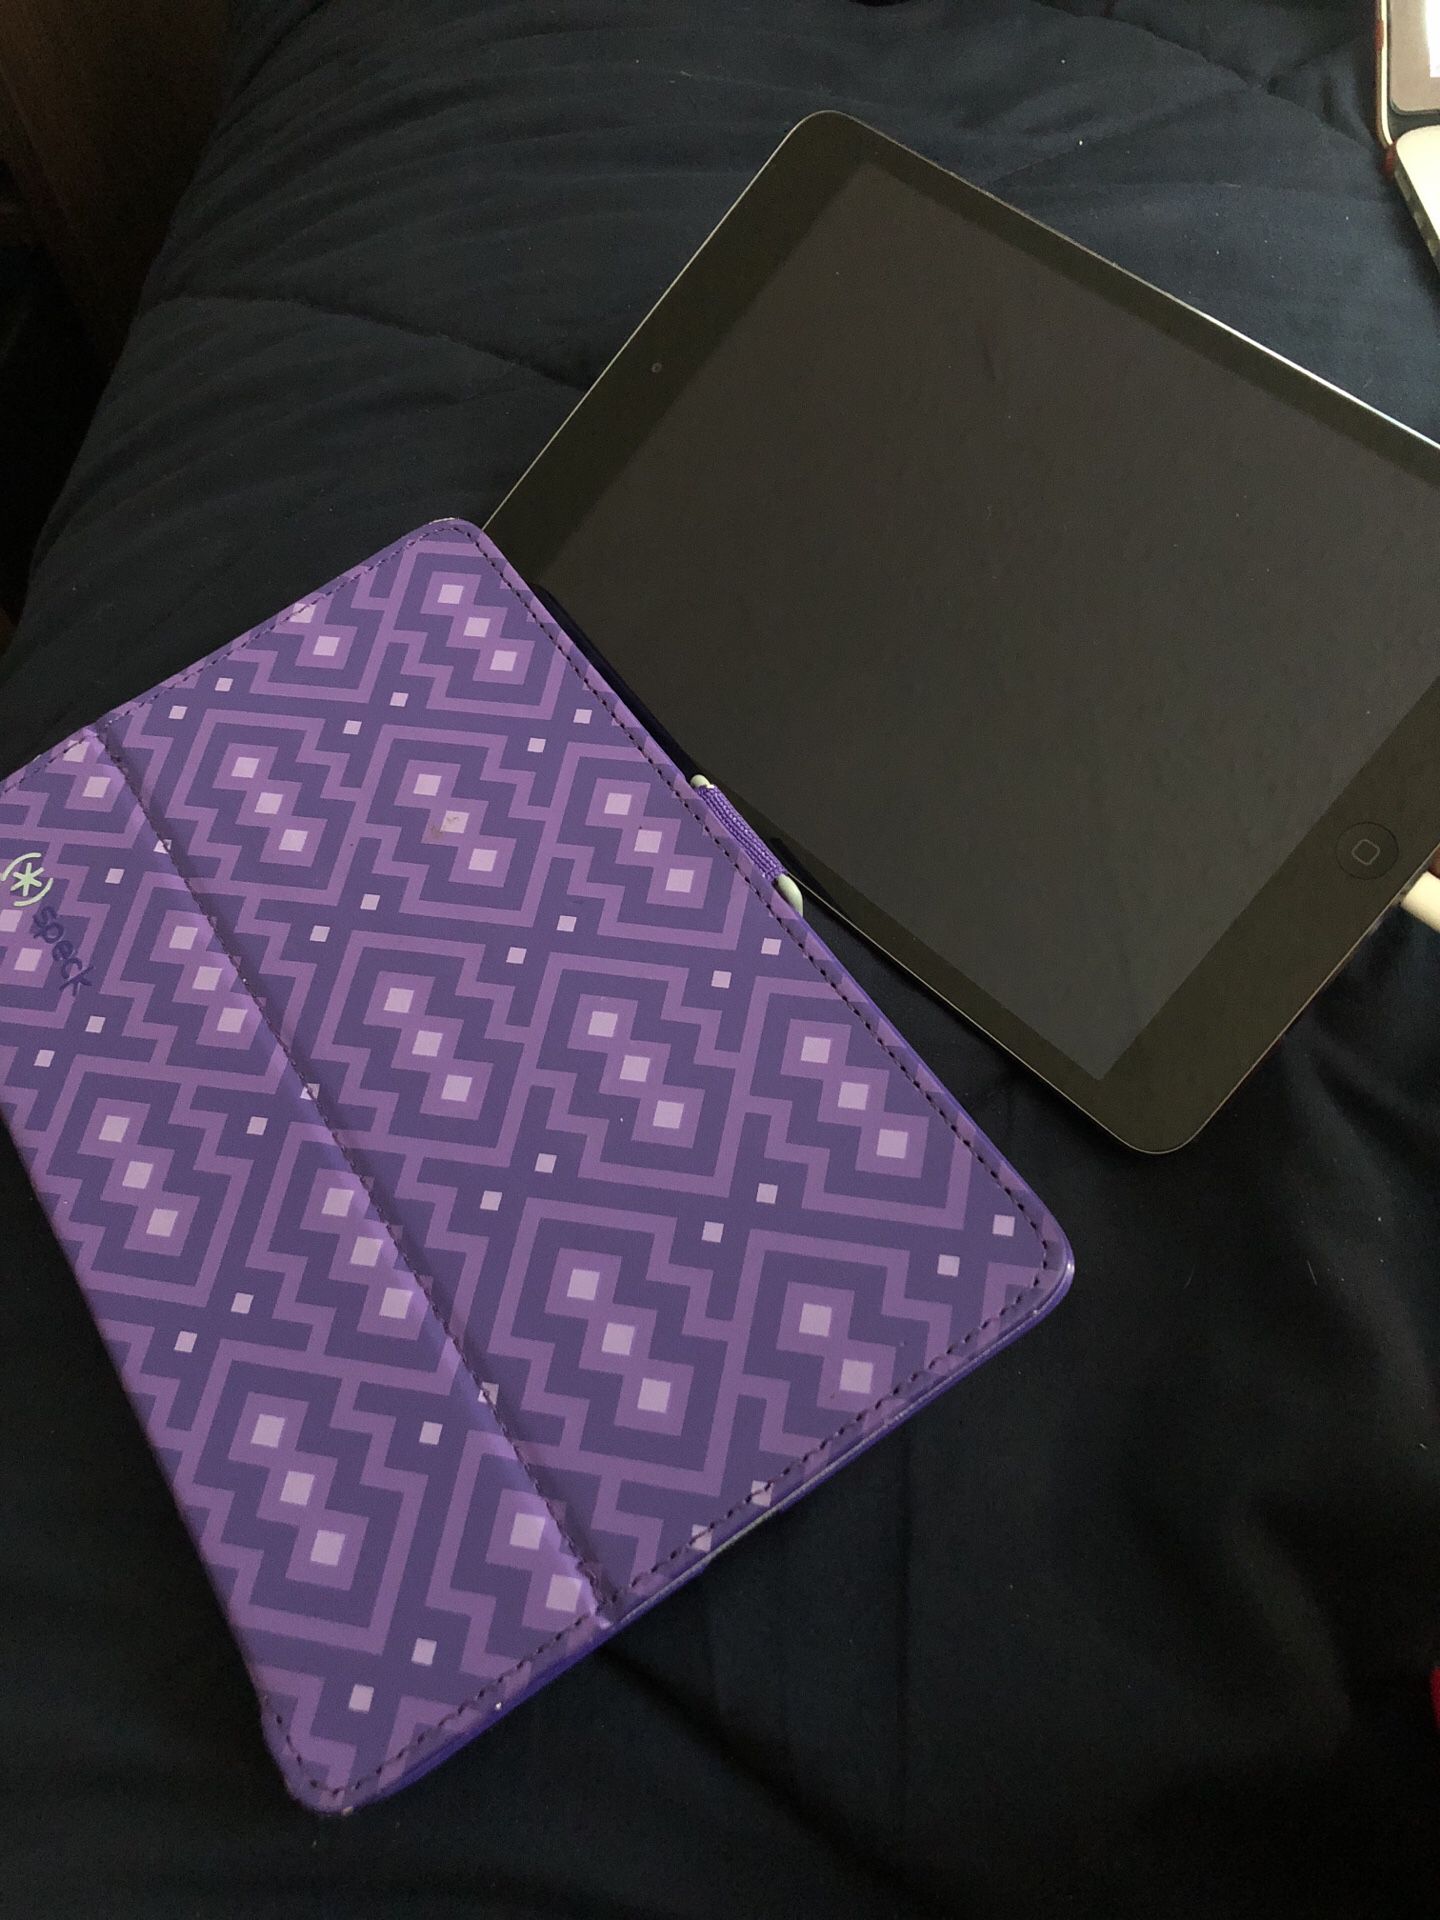 iPad mini 2 with speck case